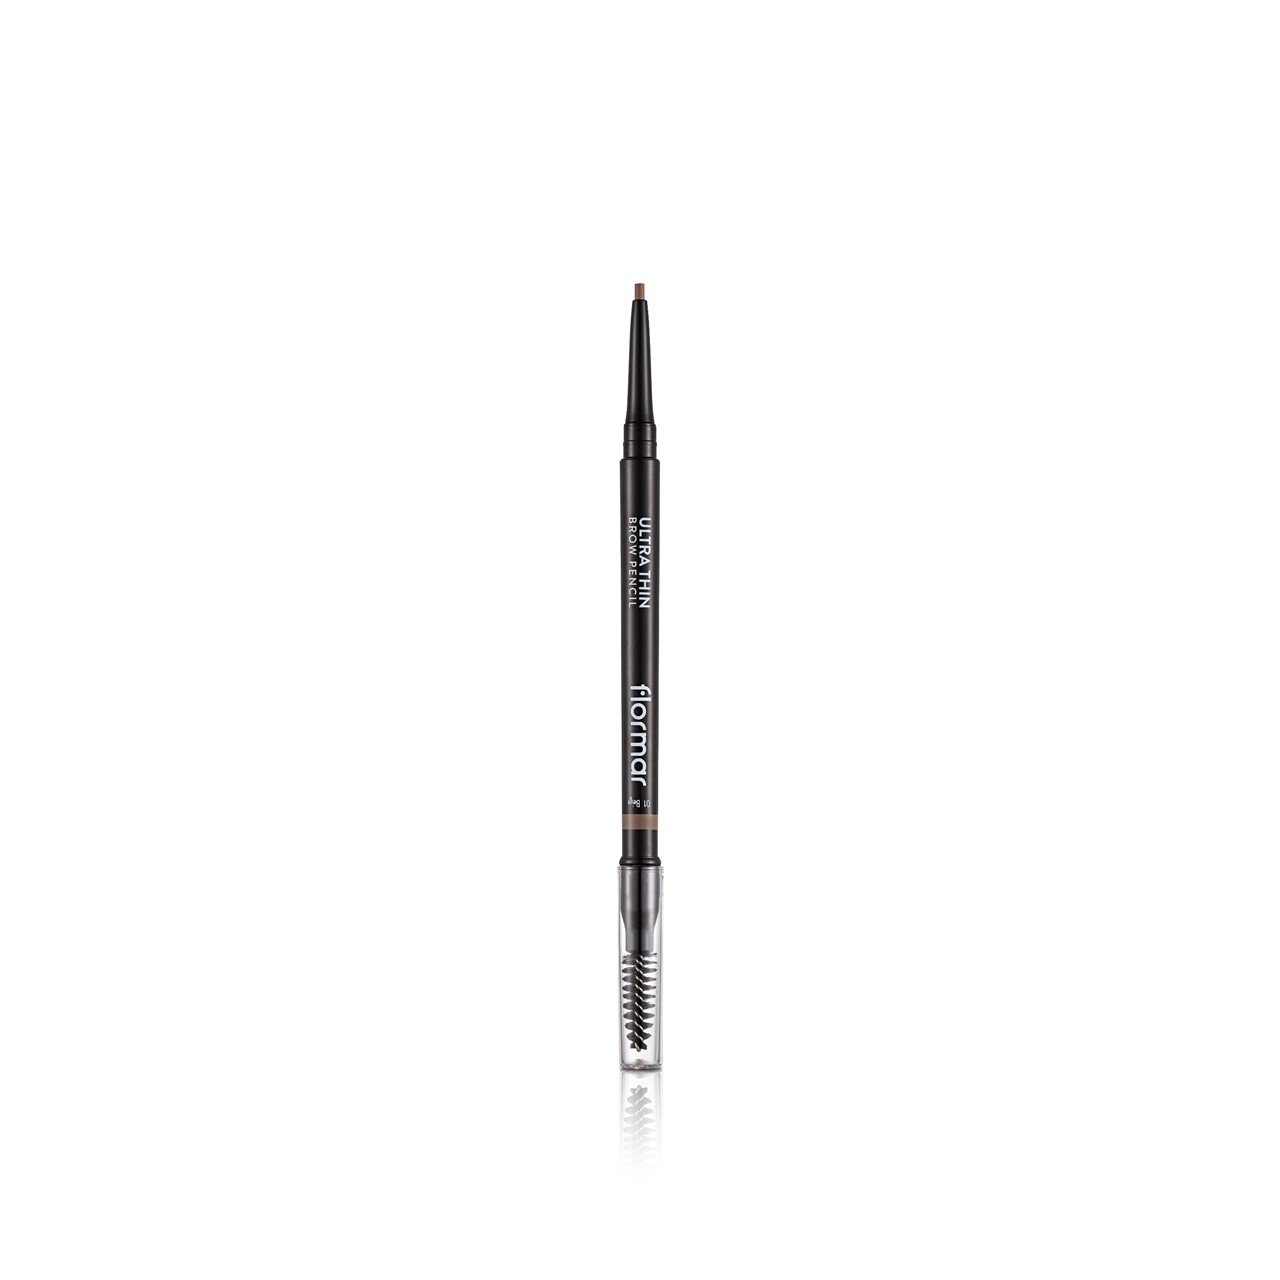 Flormar Ultra Thin Brow Pencil 01 Beige 0.14g (0.005oz)